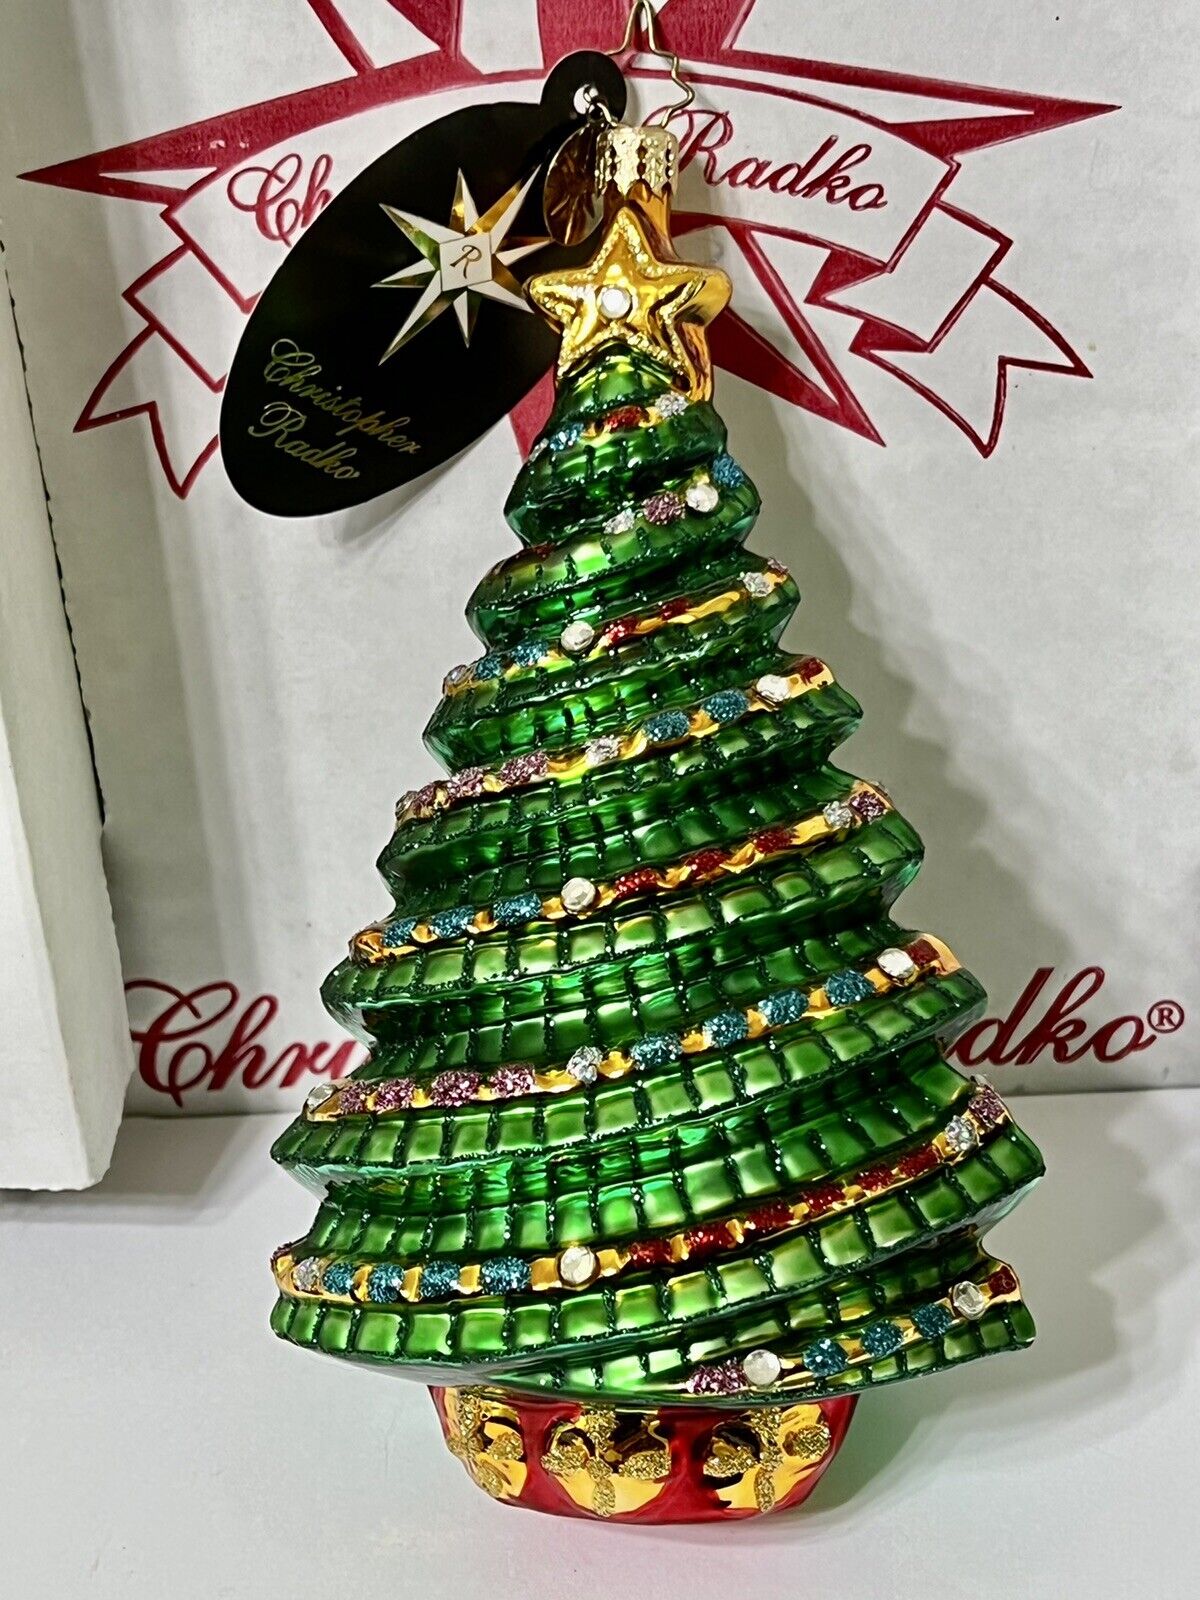 Radko Tailored Trimmings Christmas Tree Ornament 1014284 7.5” NWT Fur Fir Spruce